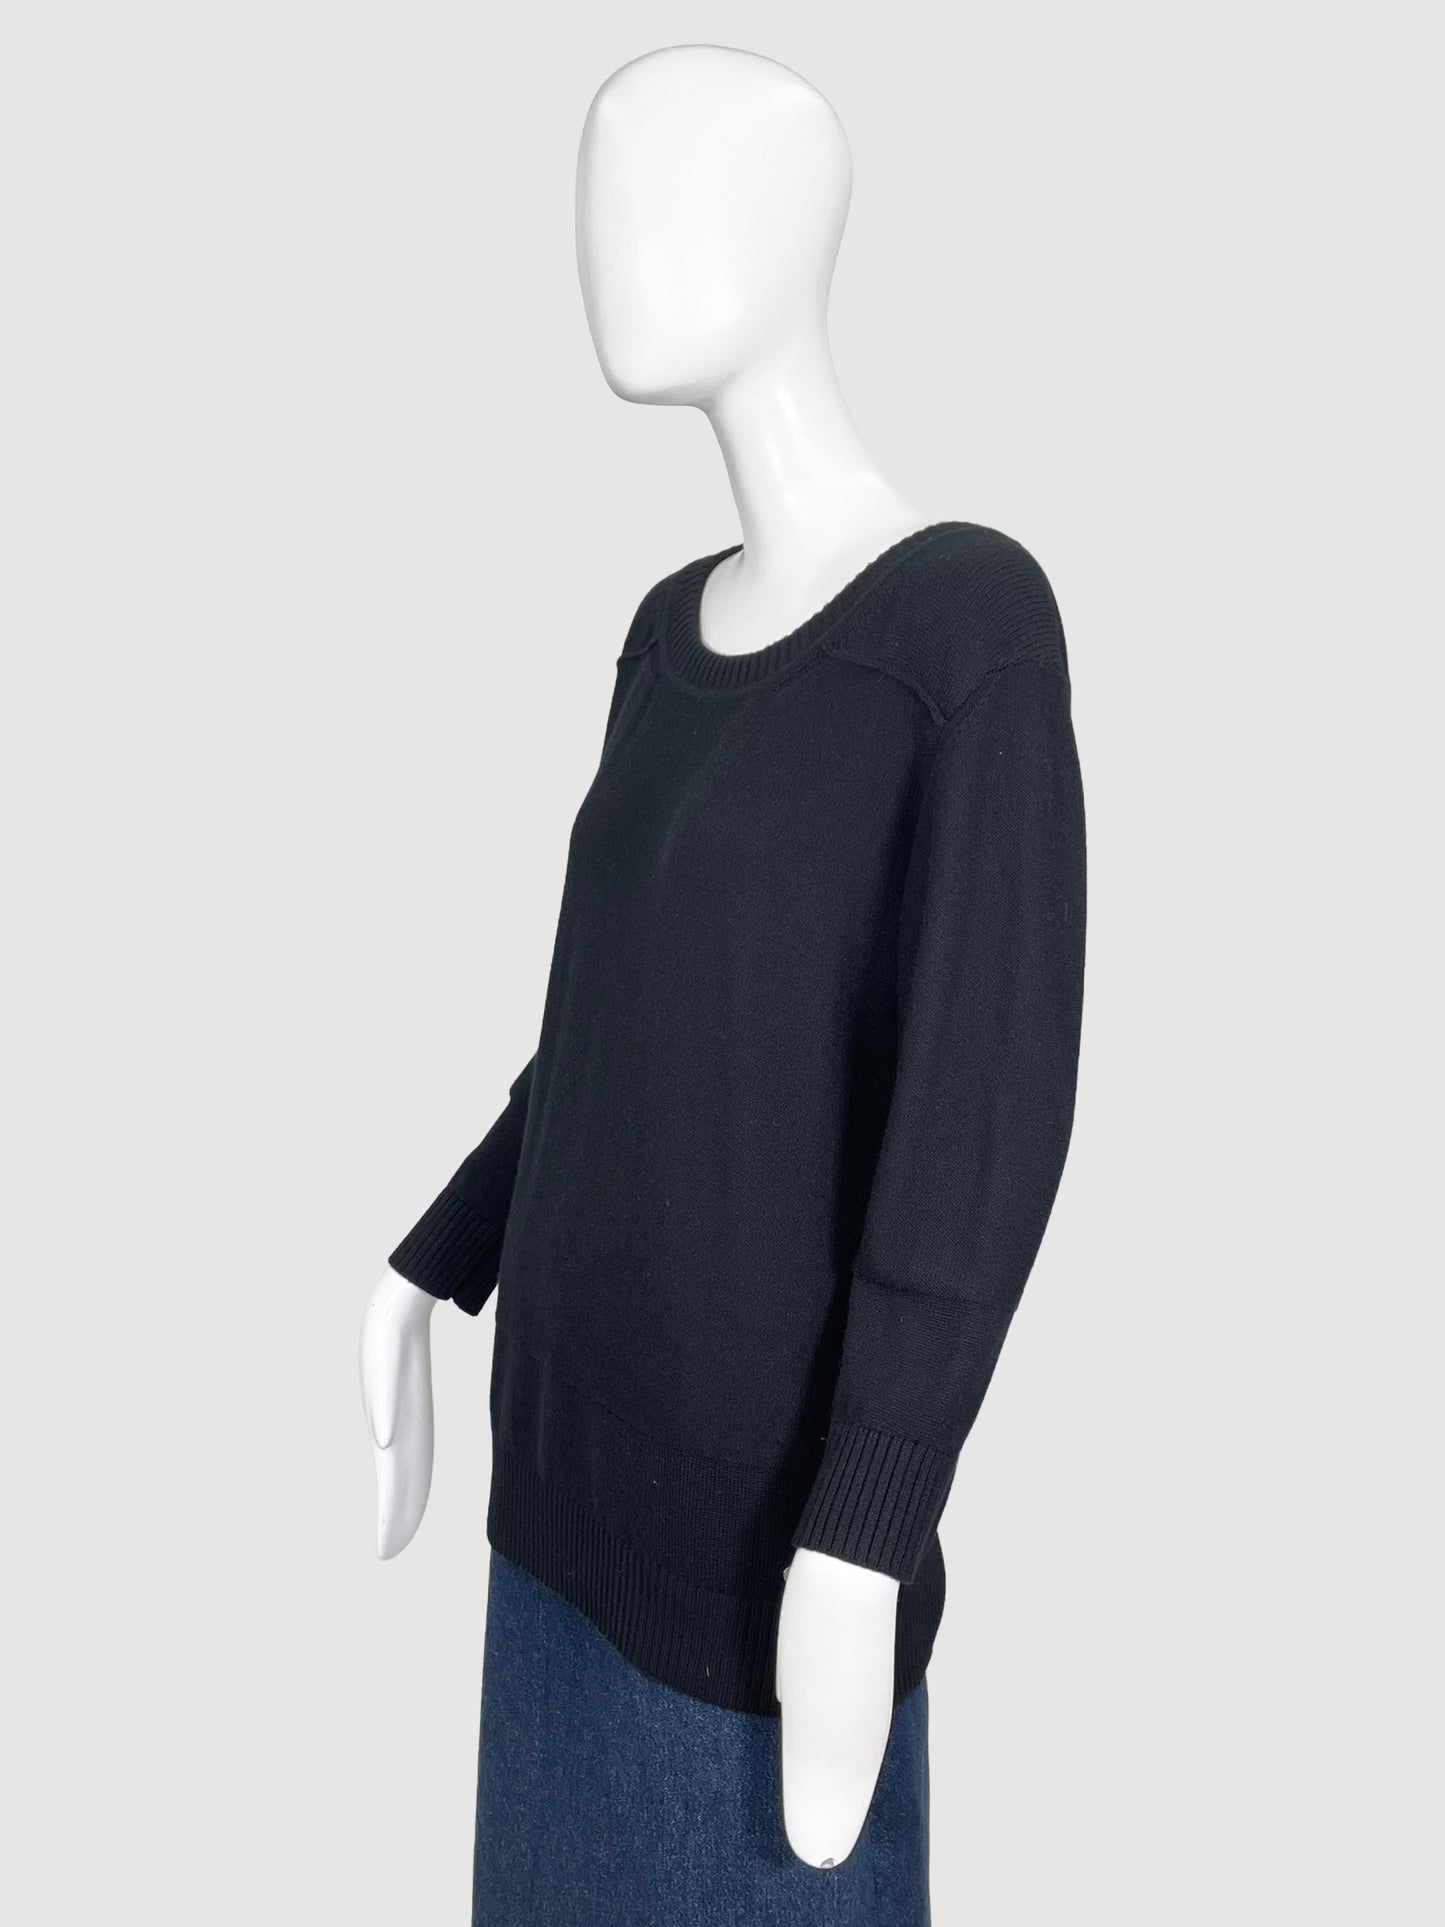 Hermès Cashmere Sweater - Size 38